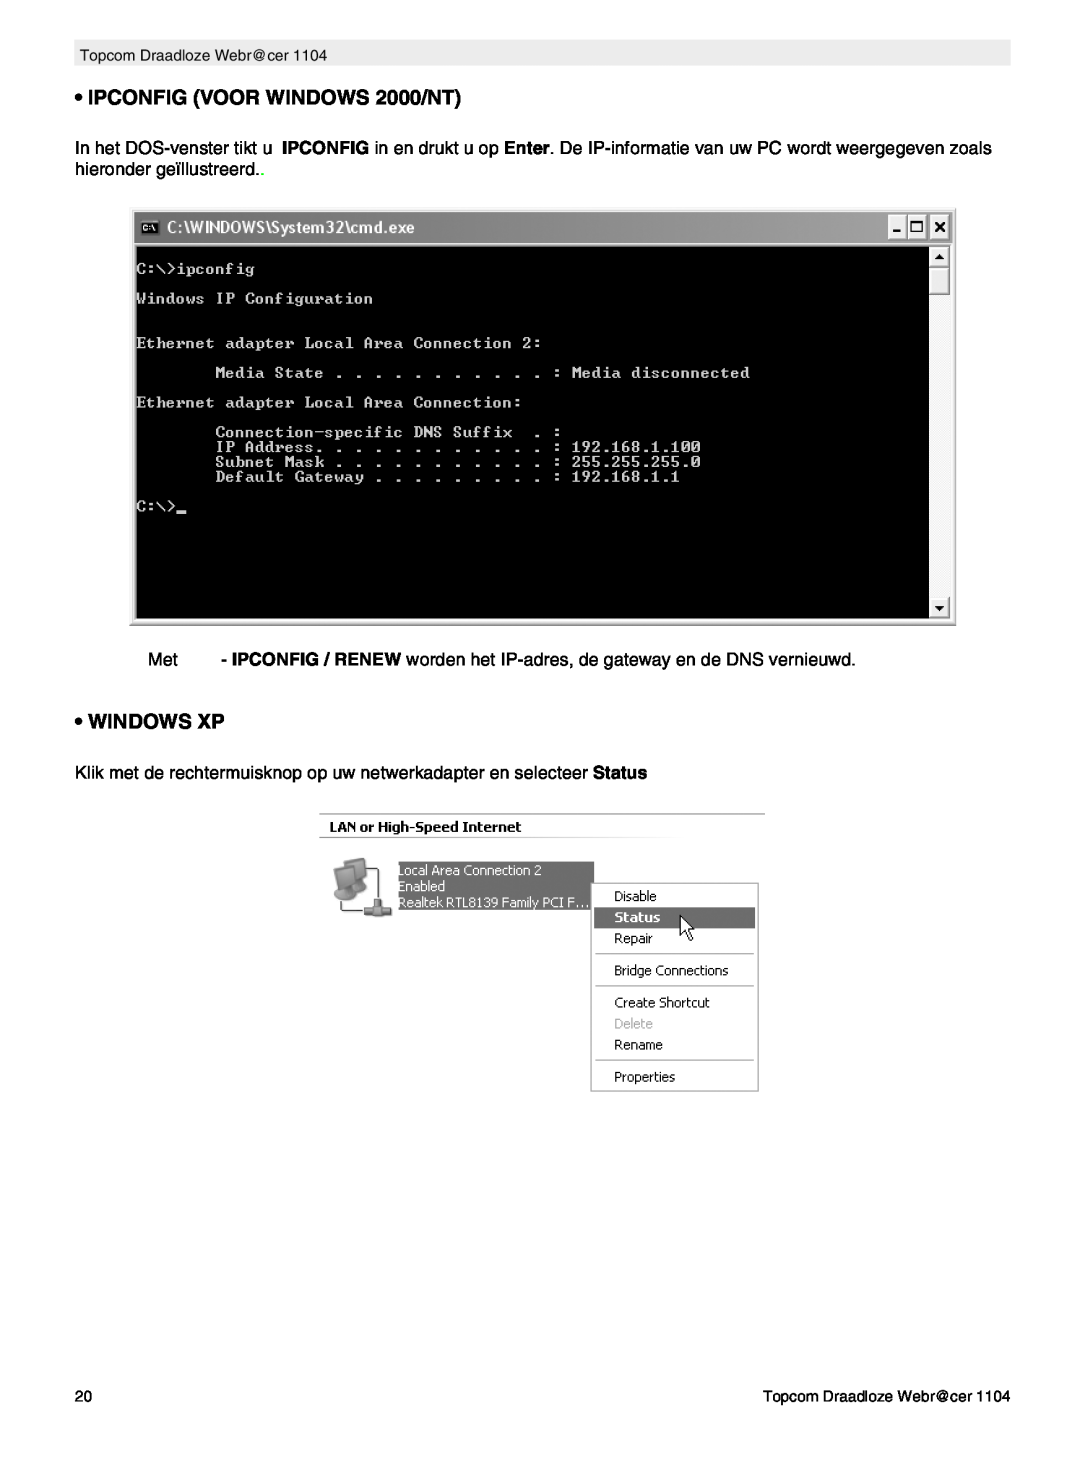 Topcom 1104 manual do utilizador IPCONFIG VOOR WINDOWS 2000/NT, Windows Xp 